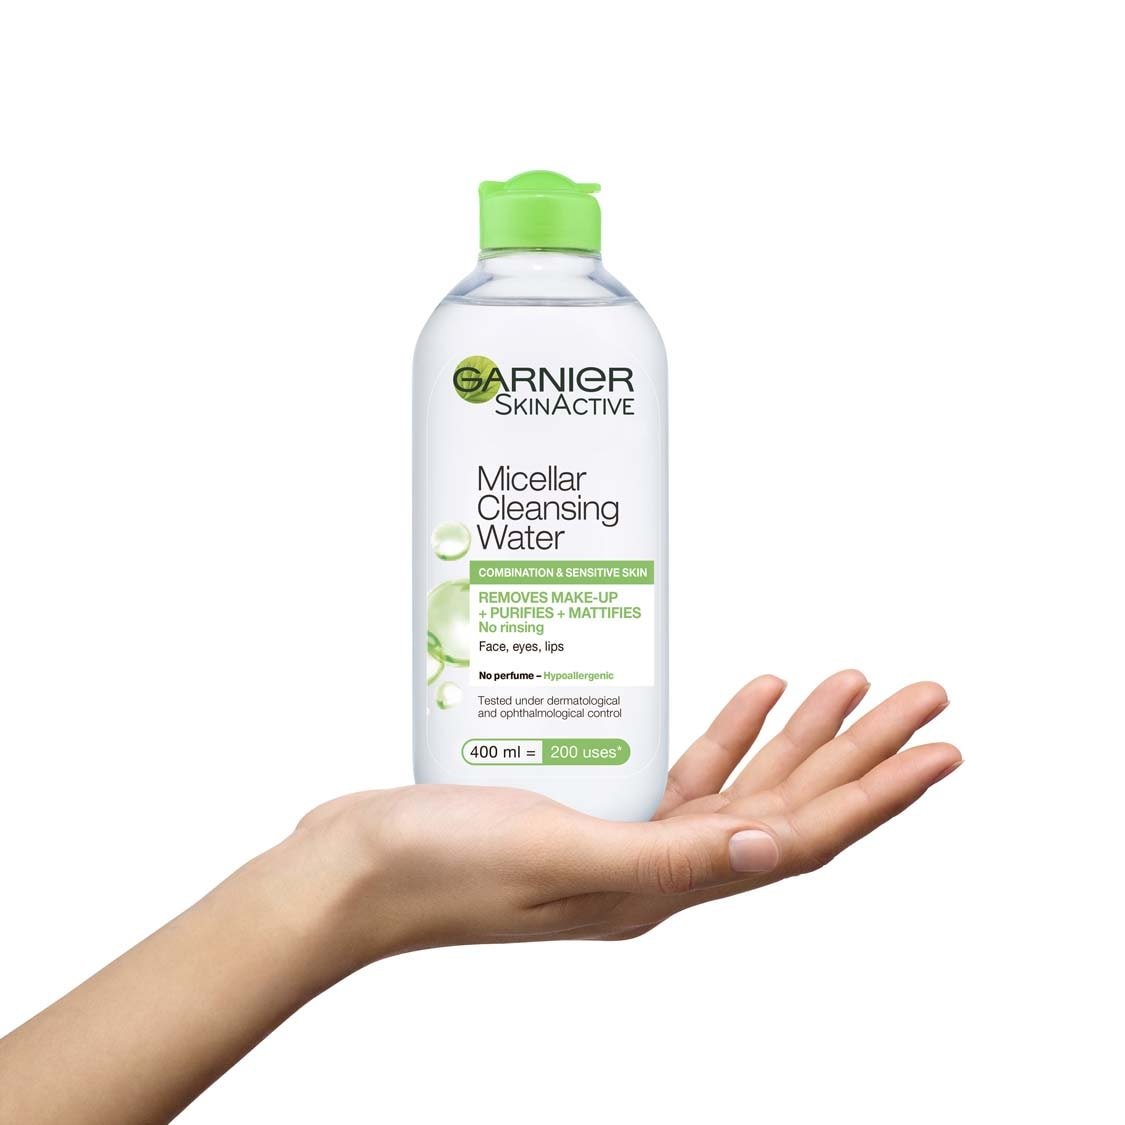 3600542263887 Garnier SkinActive Face Micellar Cleansing Water Combination Sensitive in hand